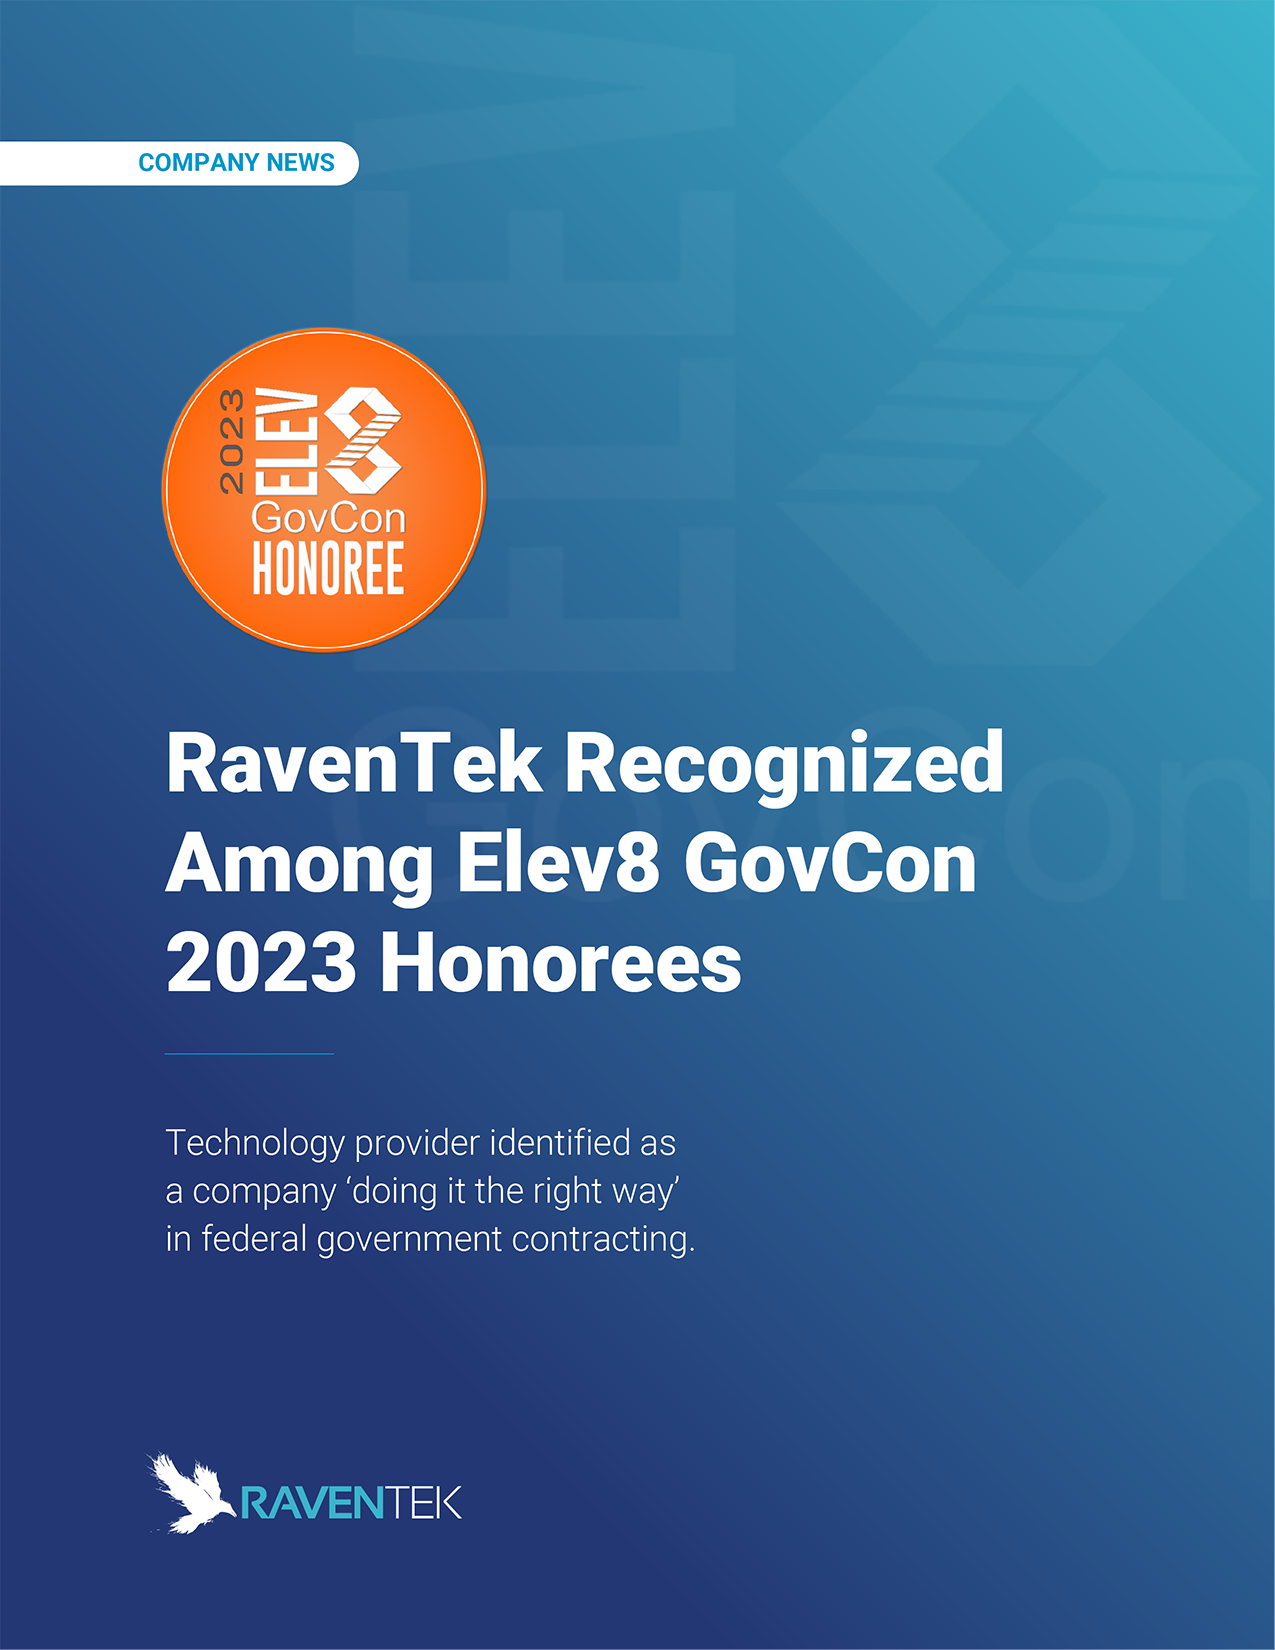 RavenTek Recognized Among Elev8 GovCon Honorees